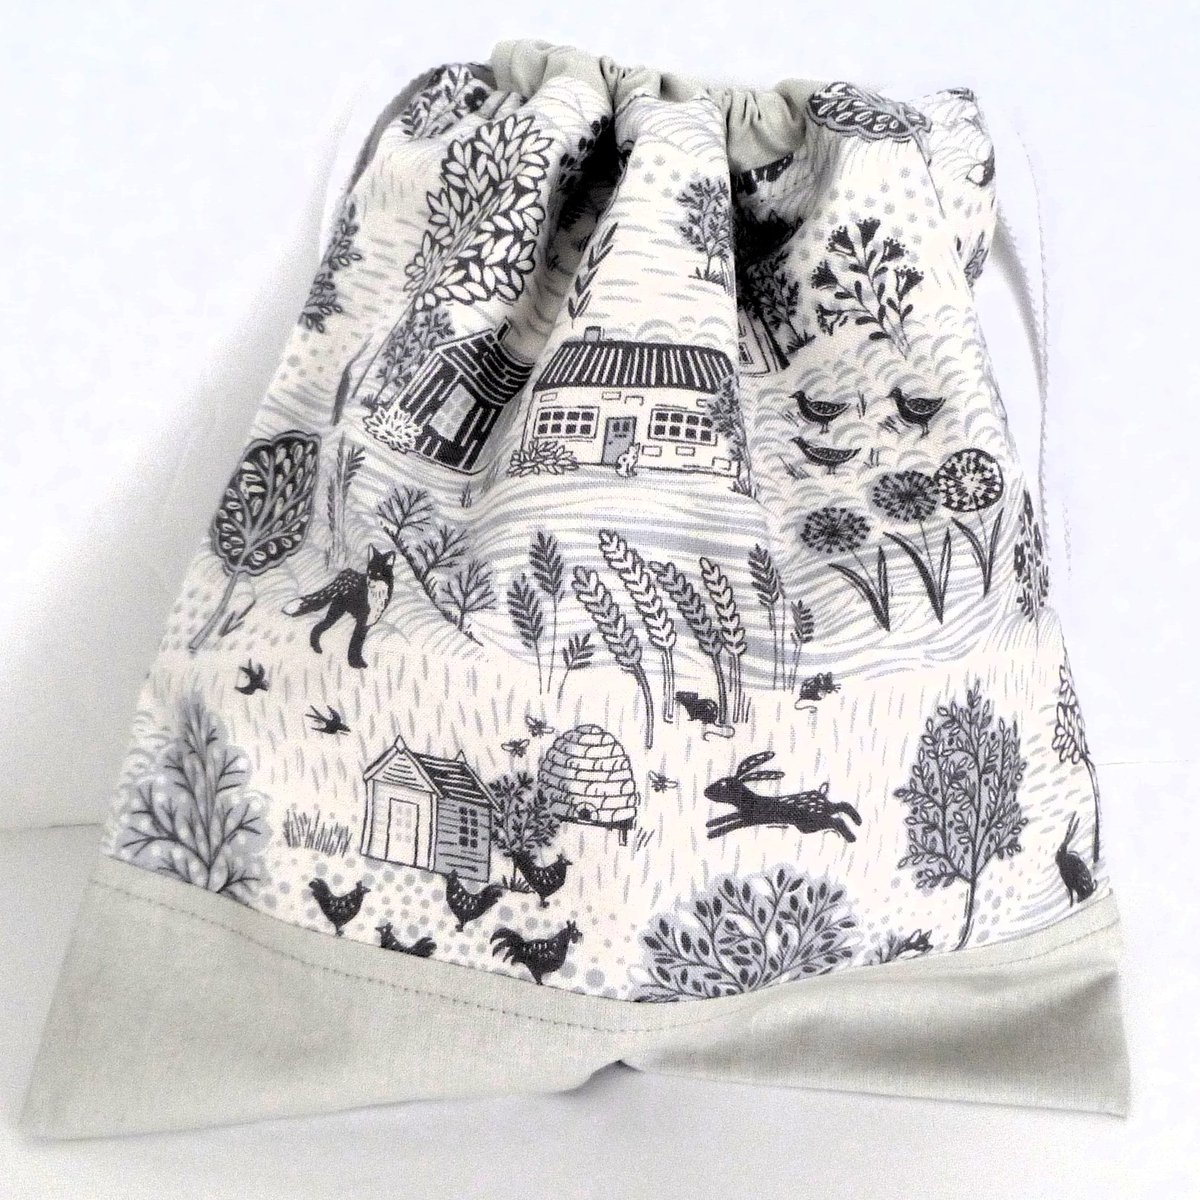 daisychaincraftsukgb.etsy.com/listing/159129…
Handmade Drawstring Bag Woodland pattern design
#etsyshop #etsyfinds #etsyuk #drawstringbag #woodland #cottonbag #handmadeuk #giftbag #fox #foxlover